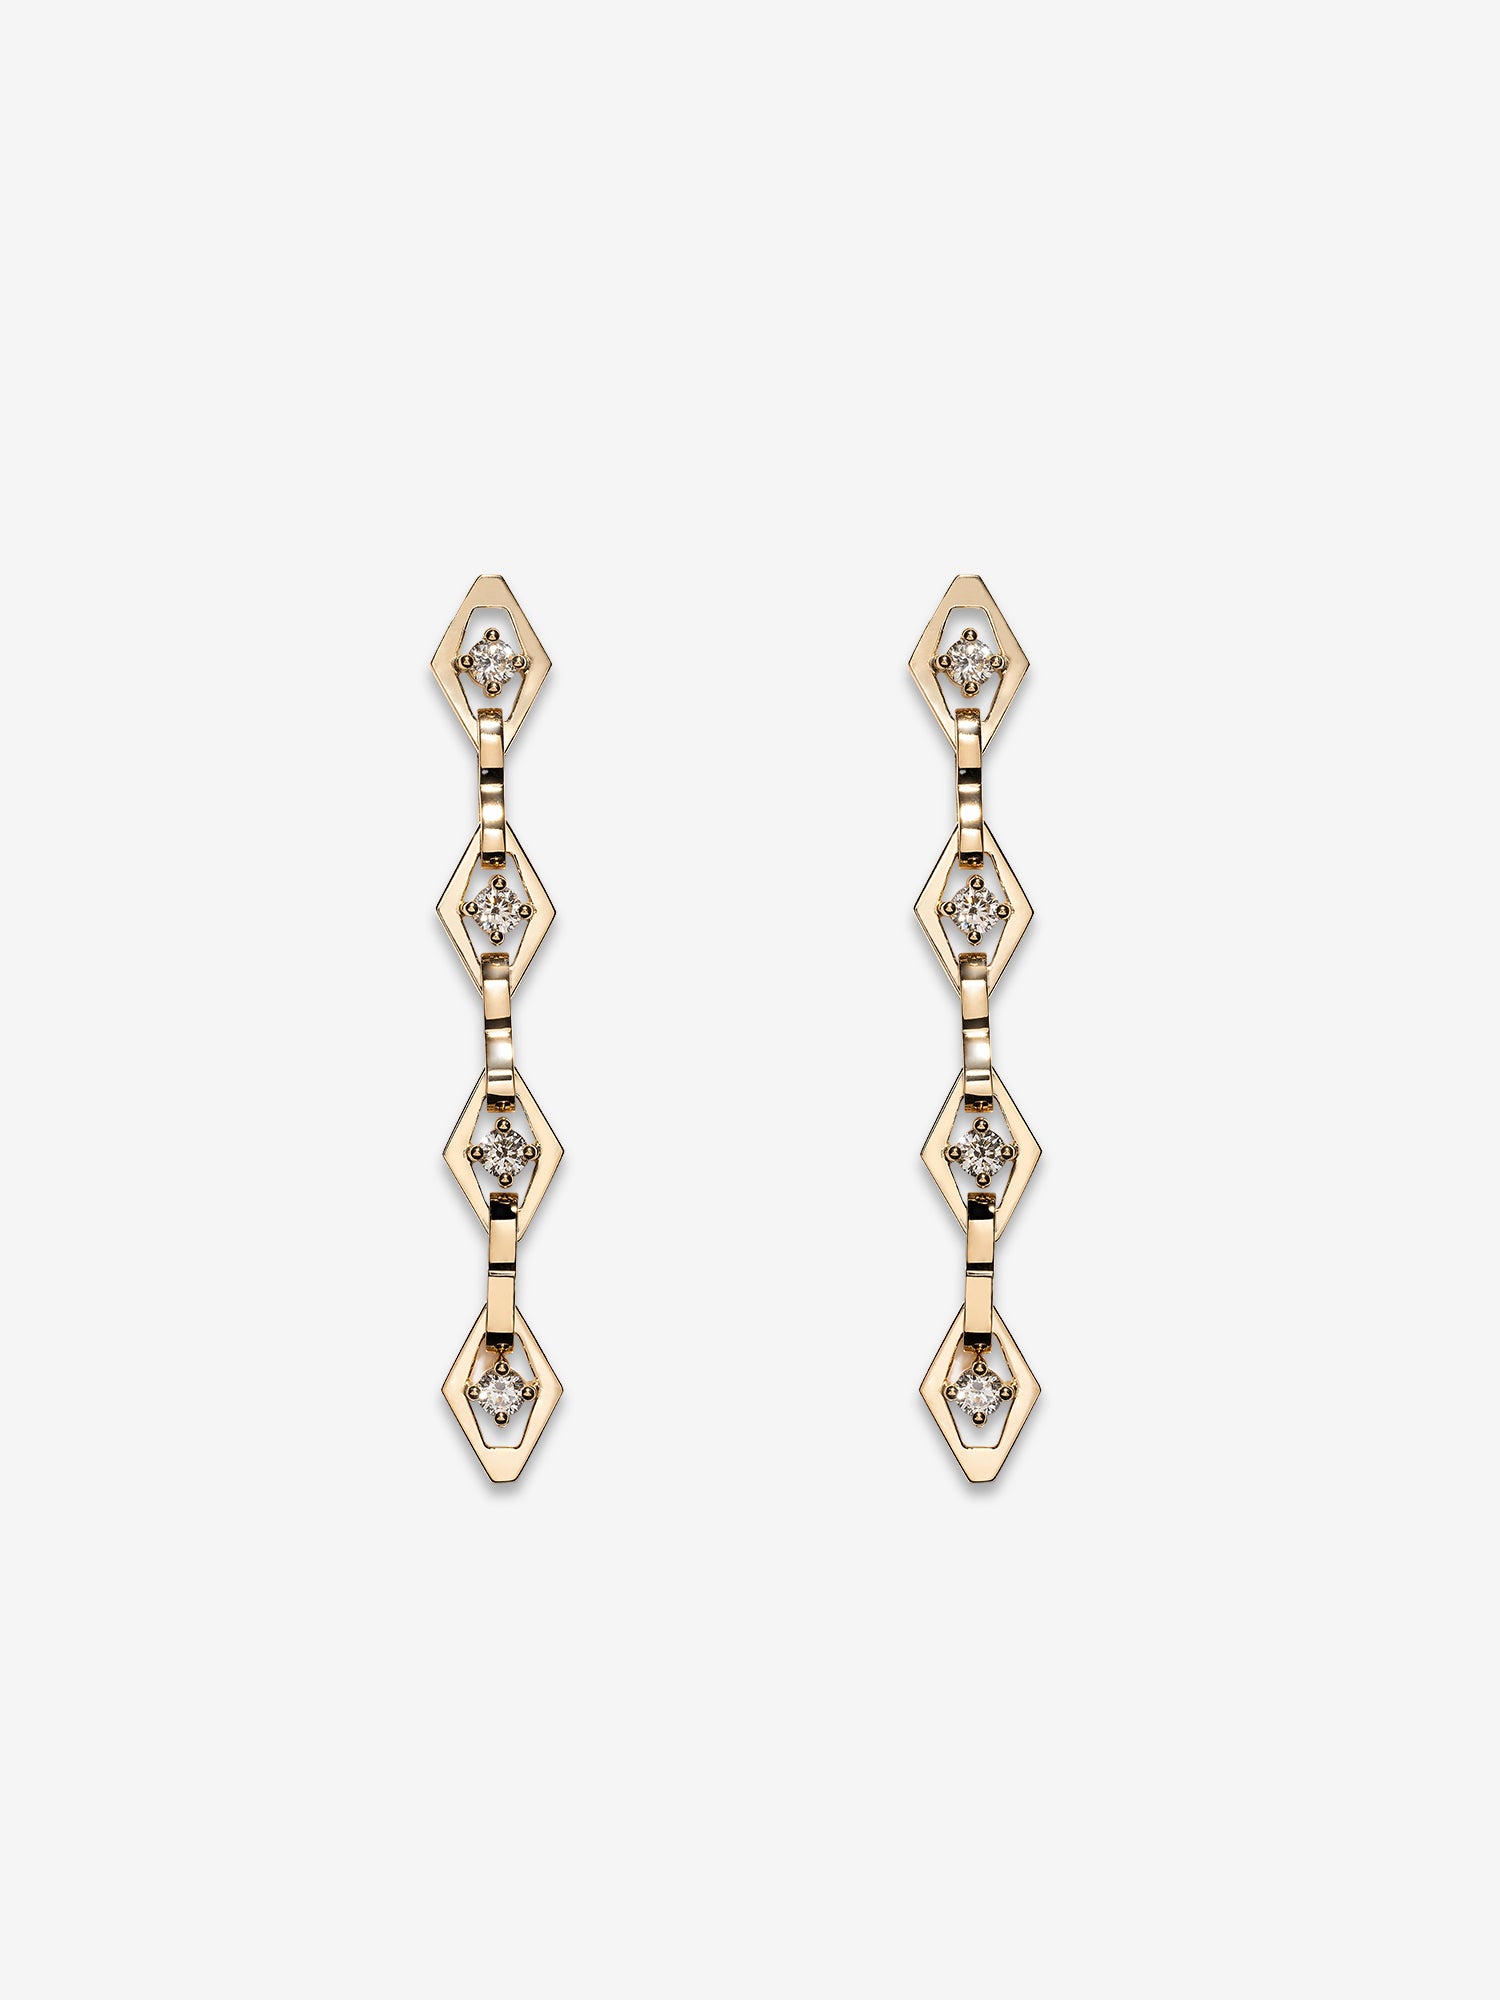 Lozenge Link Chain Earrings with Diamonds